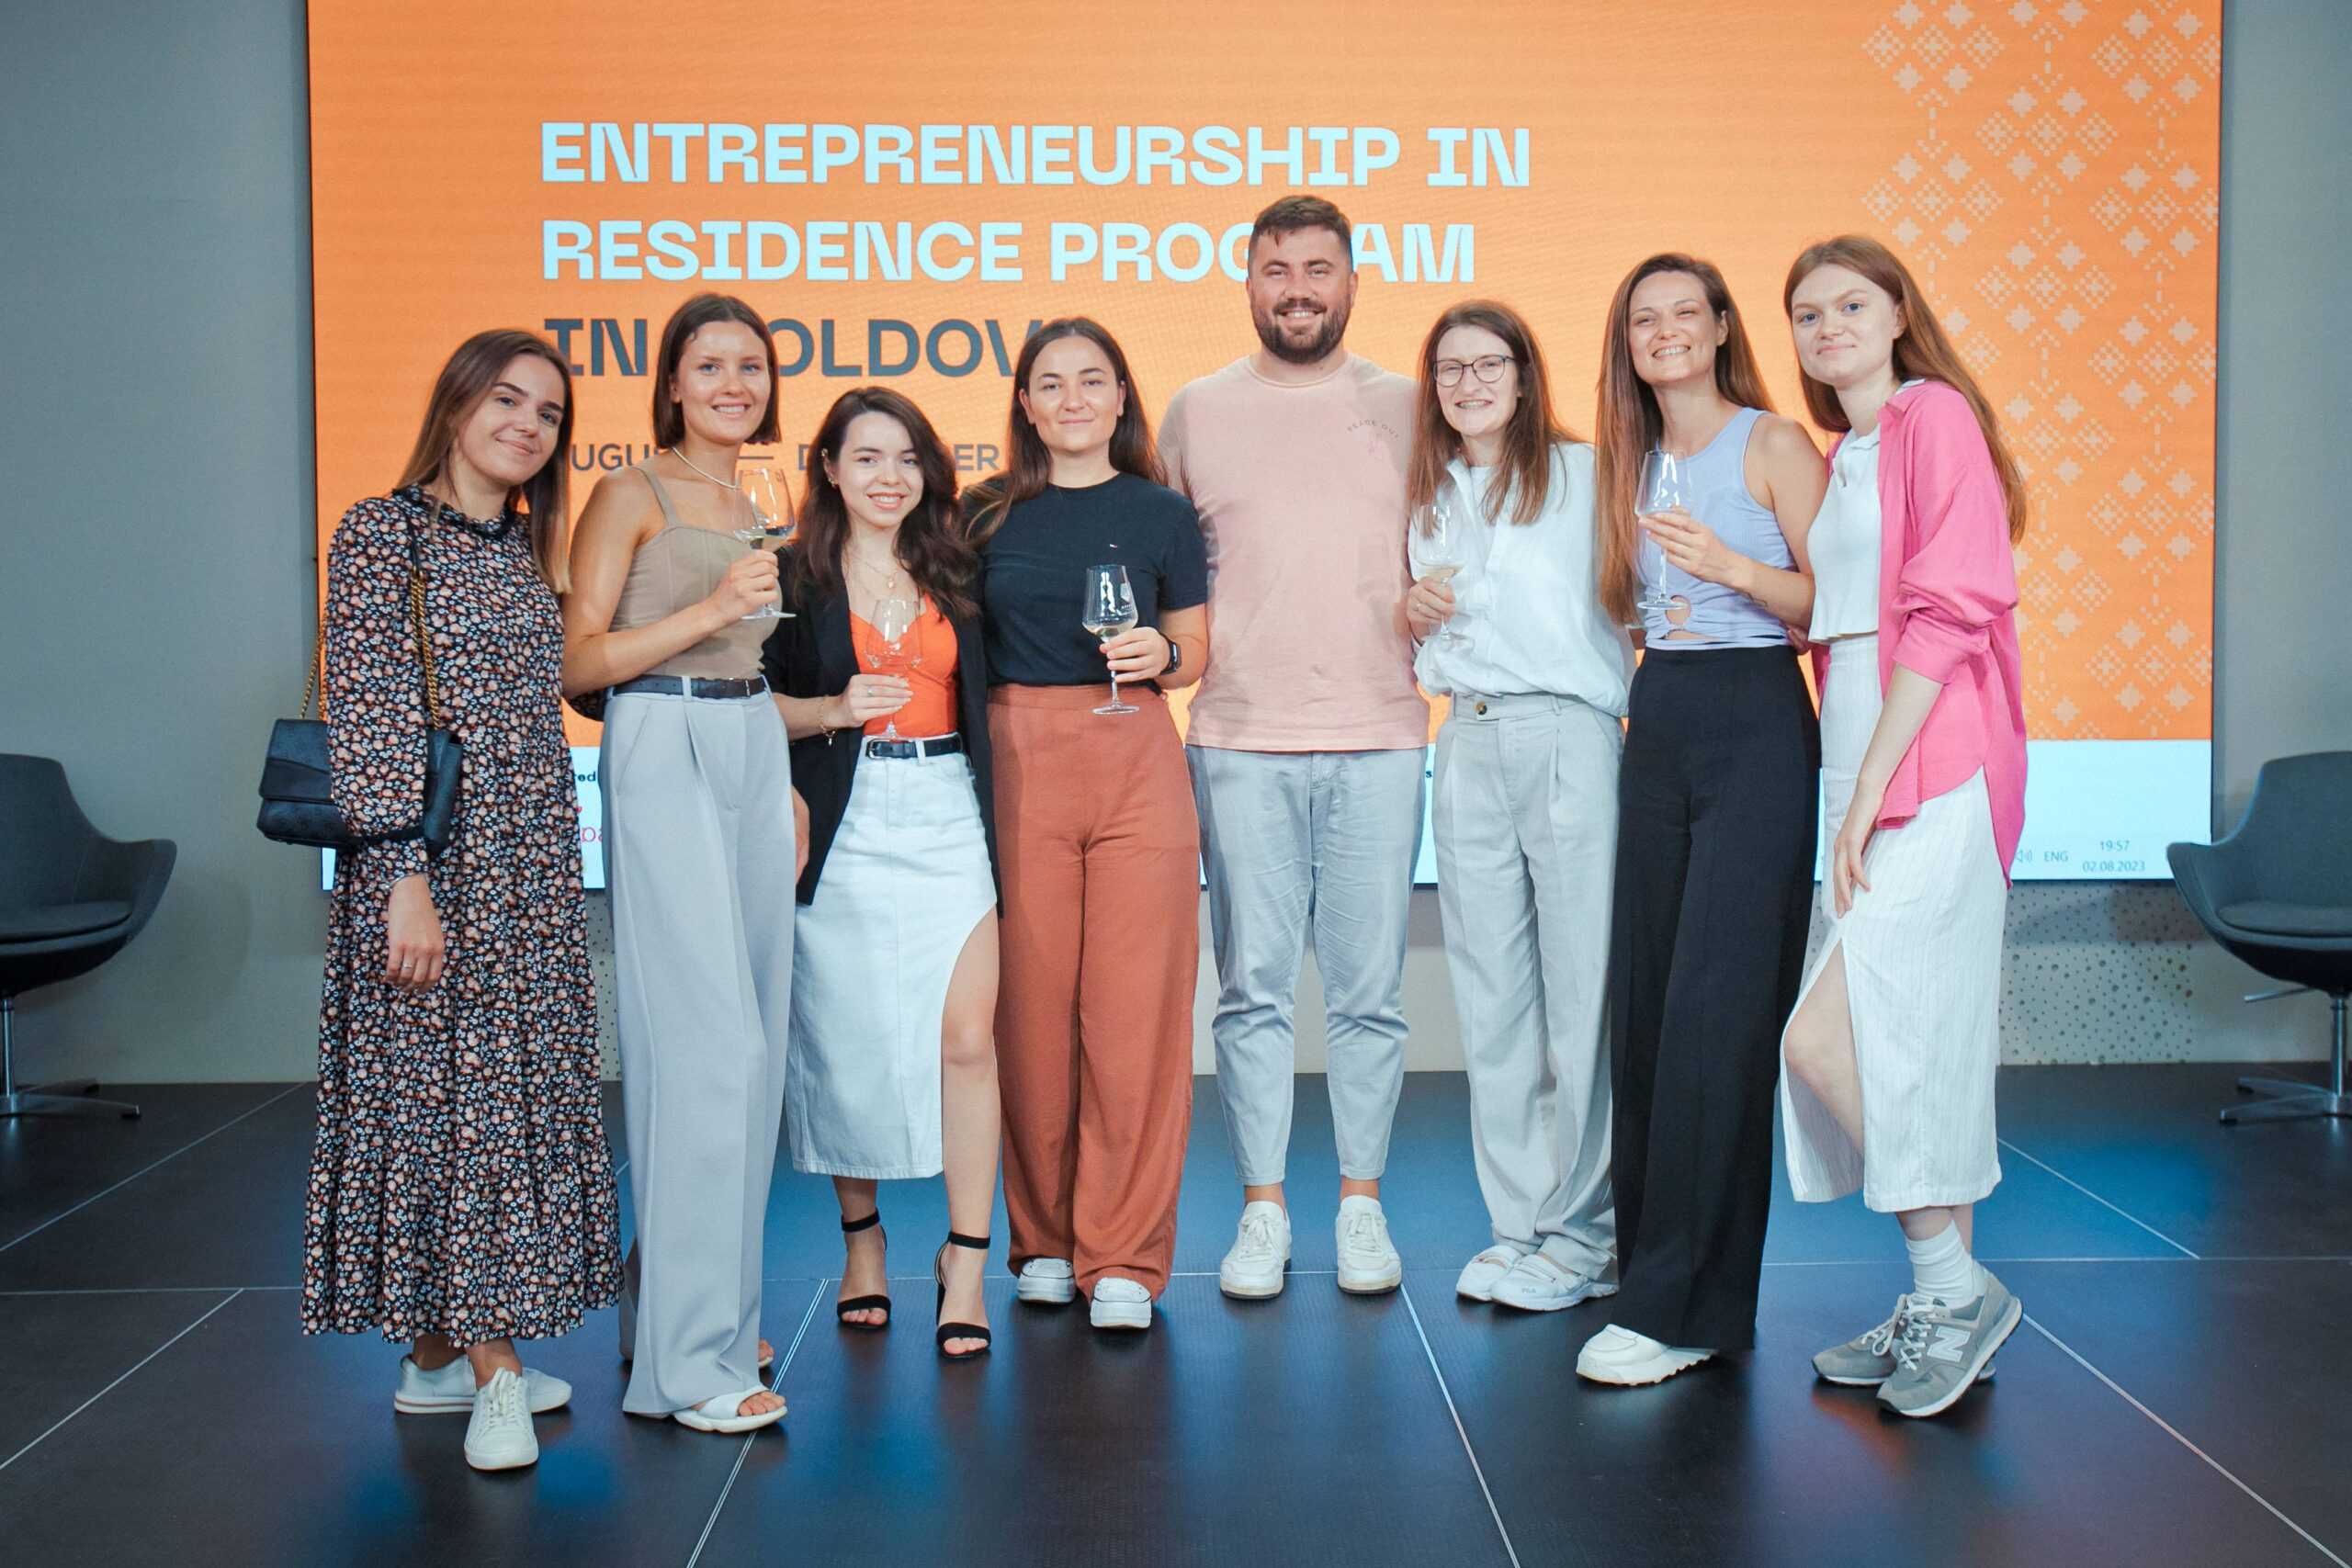 Free Mentorship Project for Startups Launched – Entrepreneurship in Residence Program in Moldova